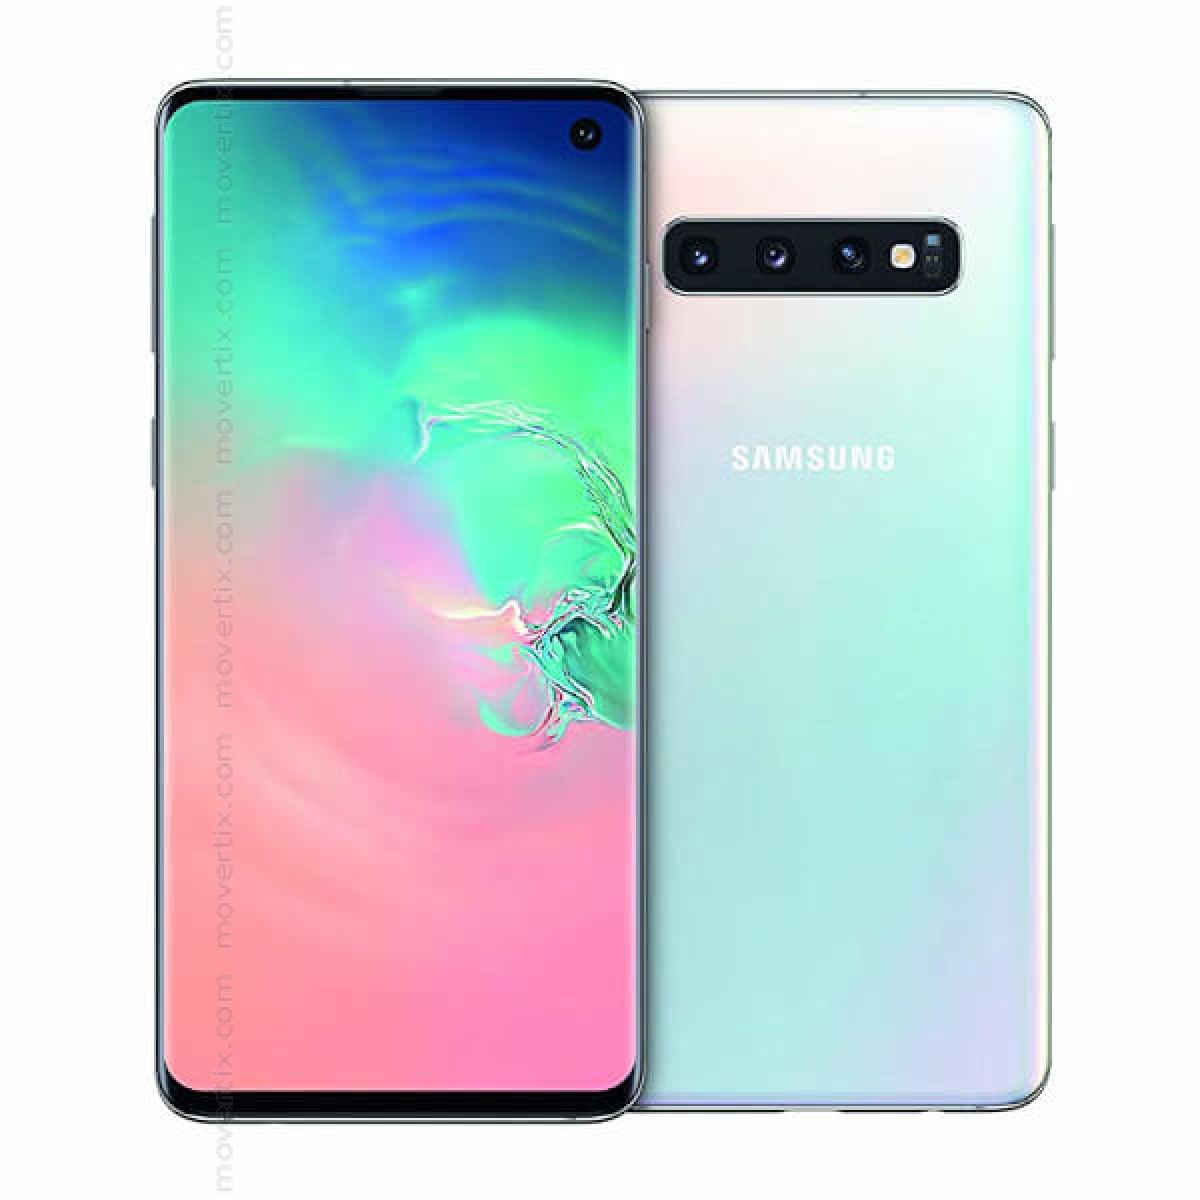 deksel Voorwaardelijk oppervlakte Samsung Galaxy S10 Dual SIM Prism White 128GB and 8GB RAM - SM-G973F/DS  (8801643747794) | Movertix Mobile Phones Shop